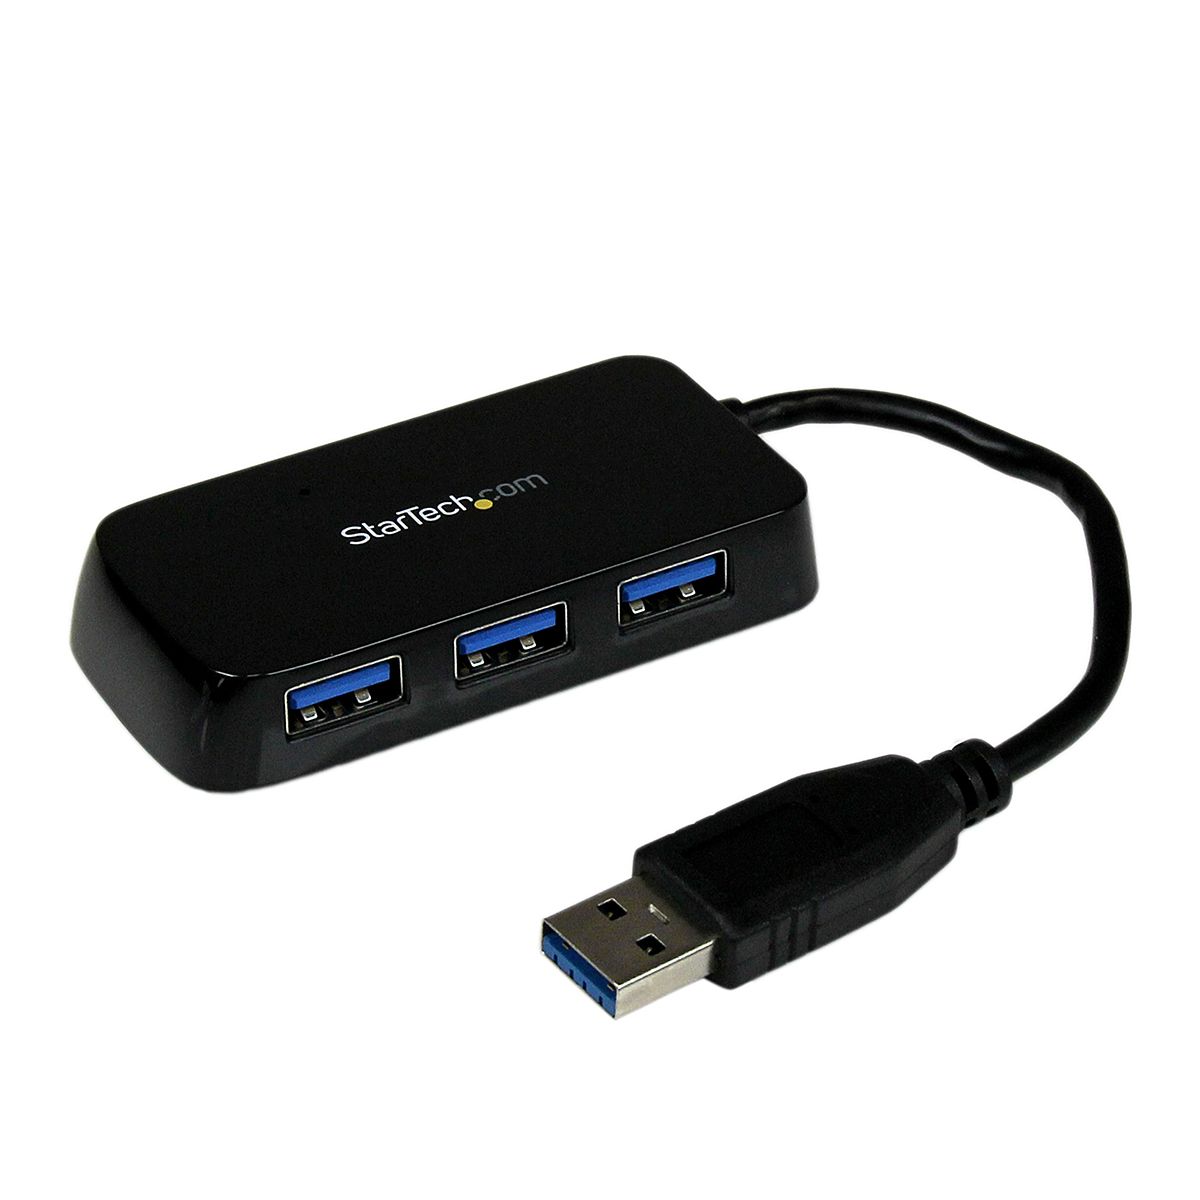 Rozbočovač USB ST4300MINU3B, standard: USB 3.0, počet portů USB: 4 USB, typ USB: USB A StarTech.com